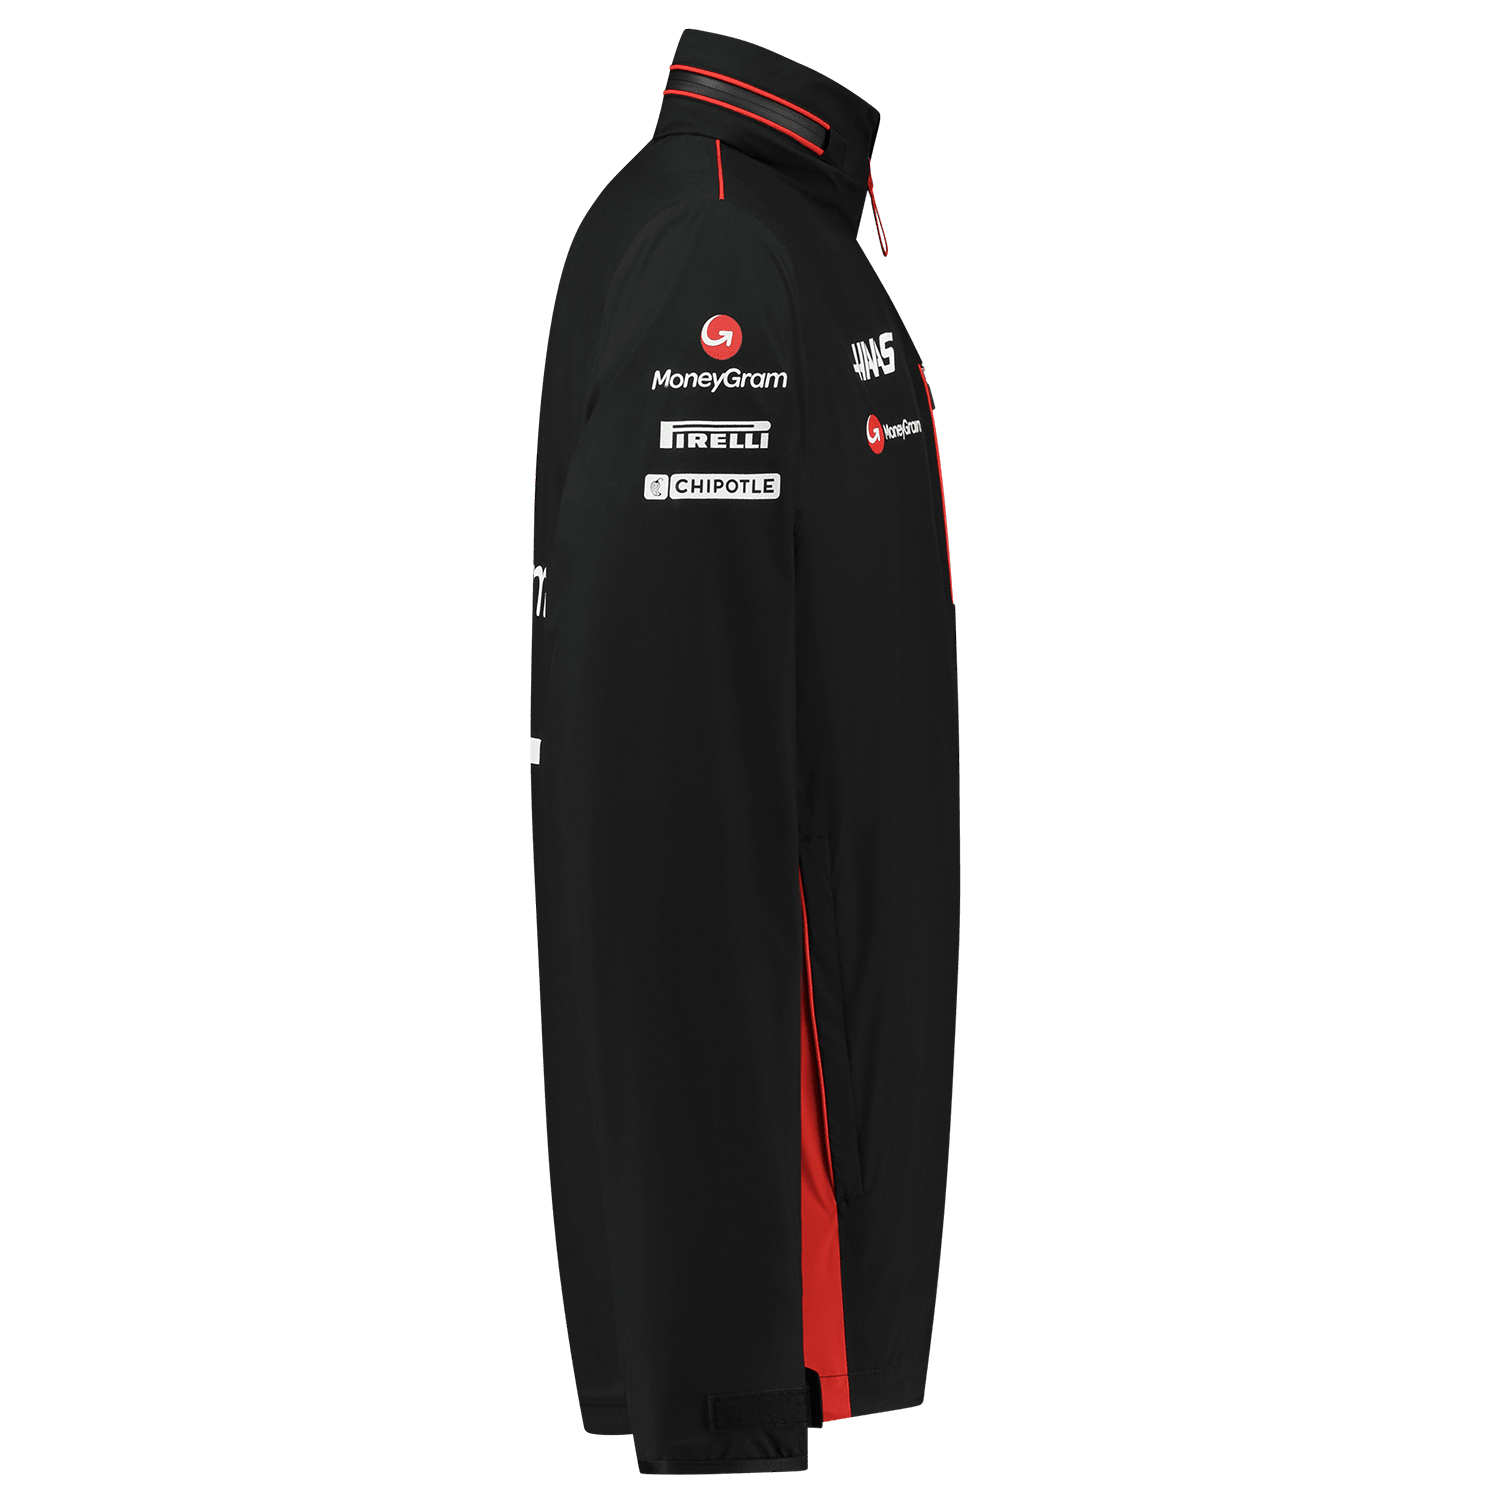 Haas Racing F1 2023 Men's Team Lightweight Rain Jacket - Black